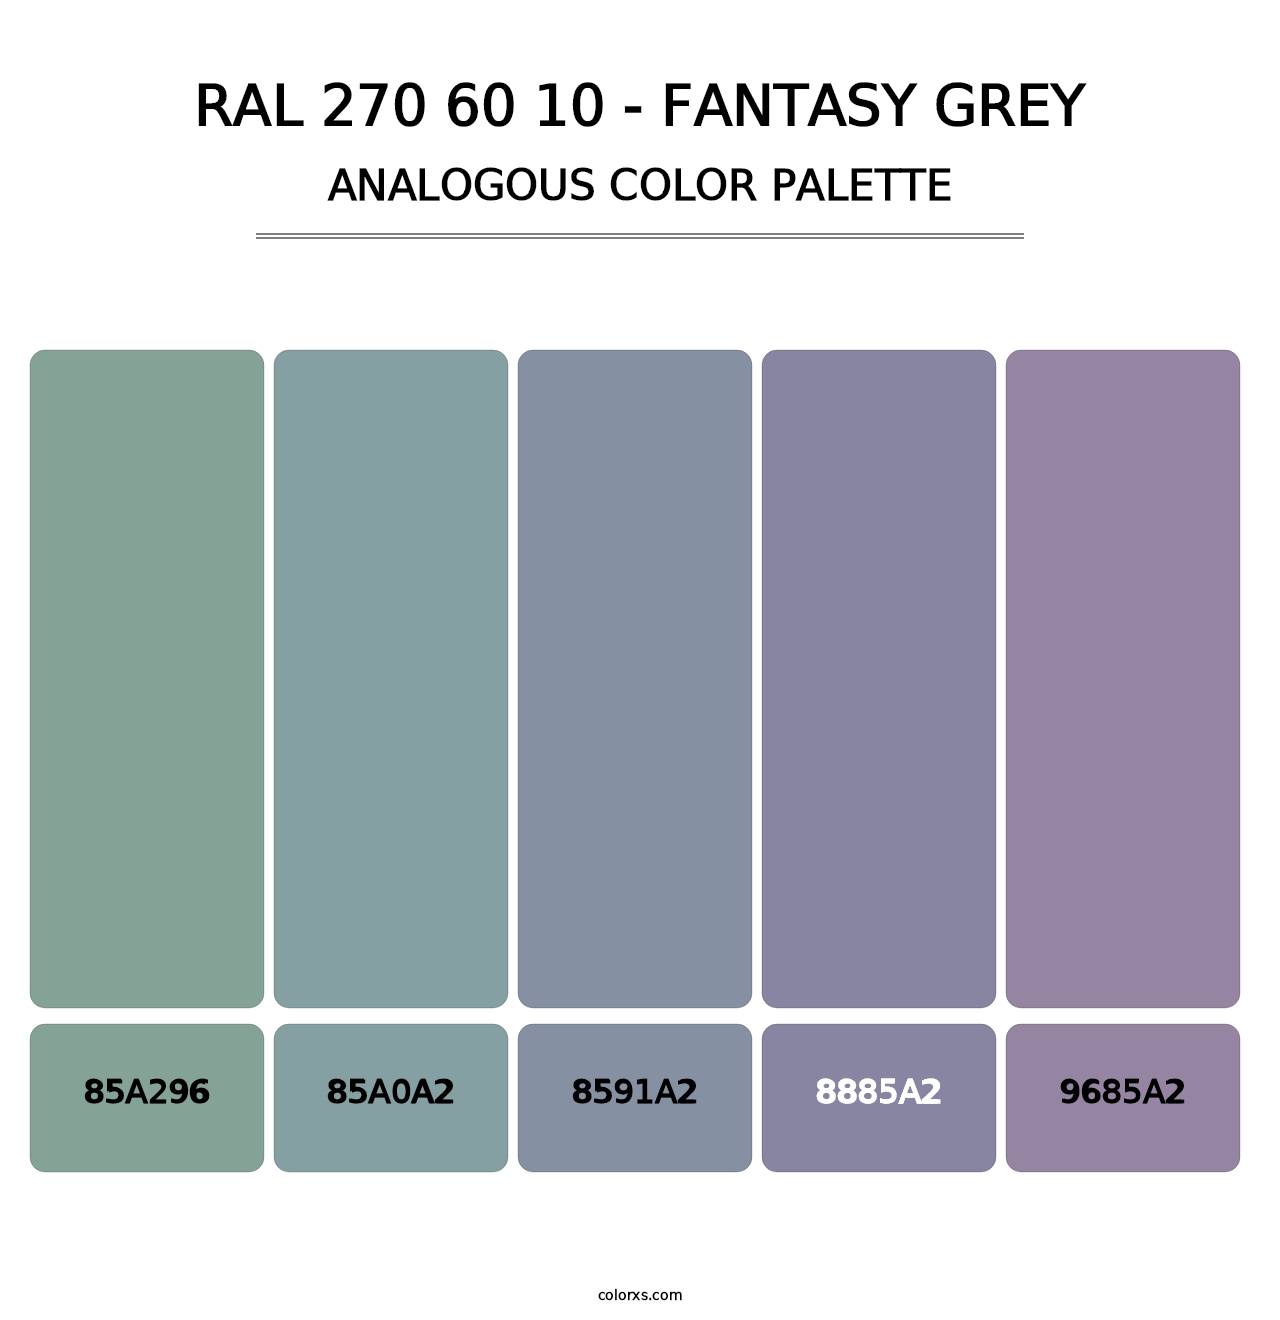 RAL 270 60 10 - Fantasy Grey - Analogous Color Palette